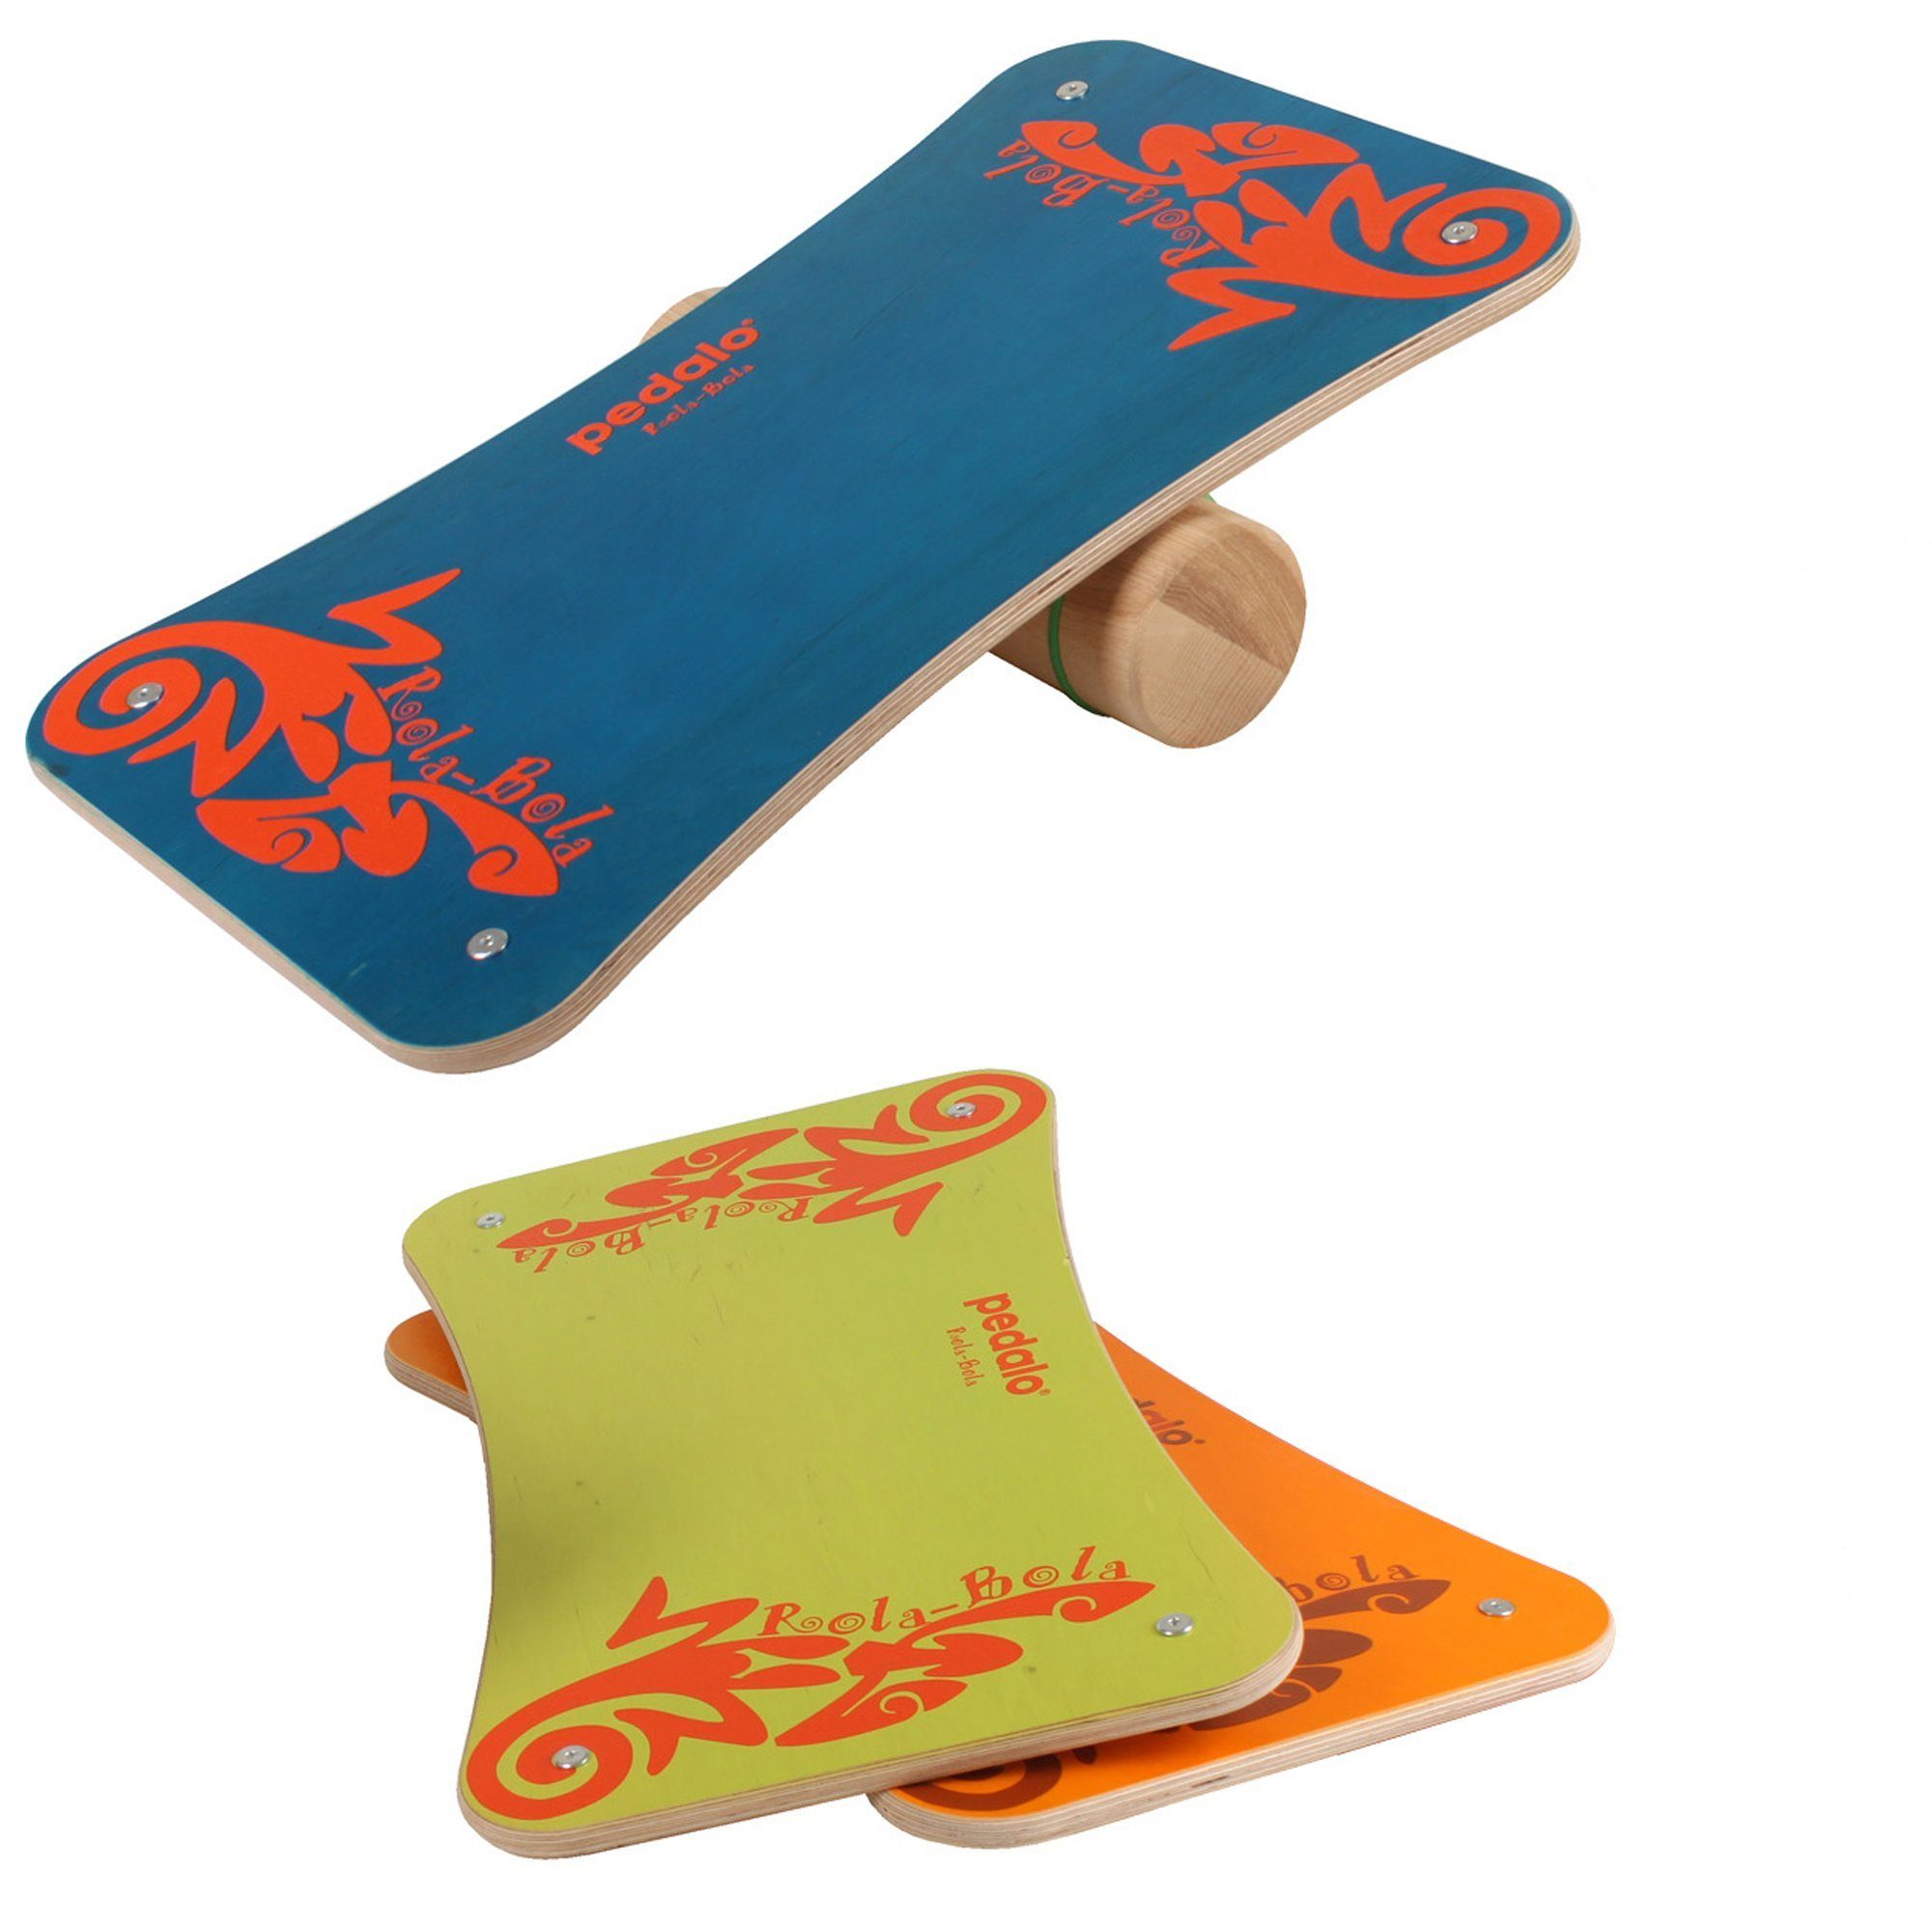 Rola-Bola pedalo® Gleichgewichtstrainer, Balanceboard, Reflextrainer Balanceboard grün Pedalo